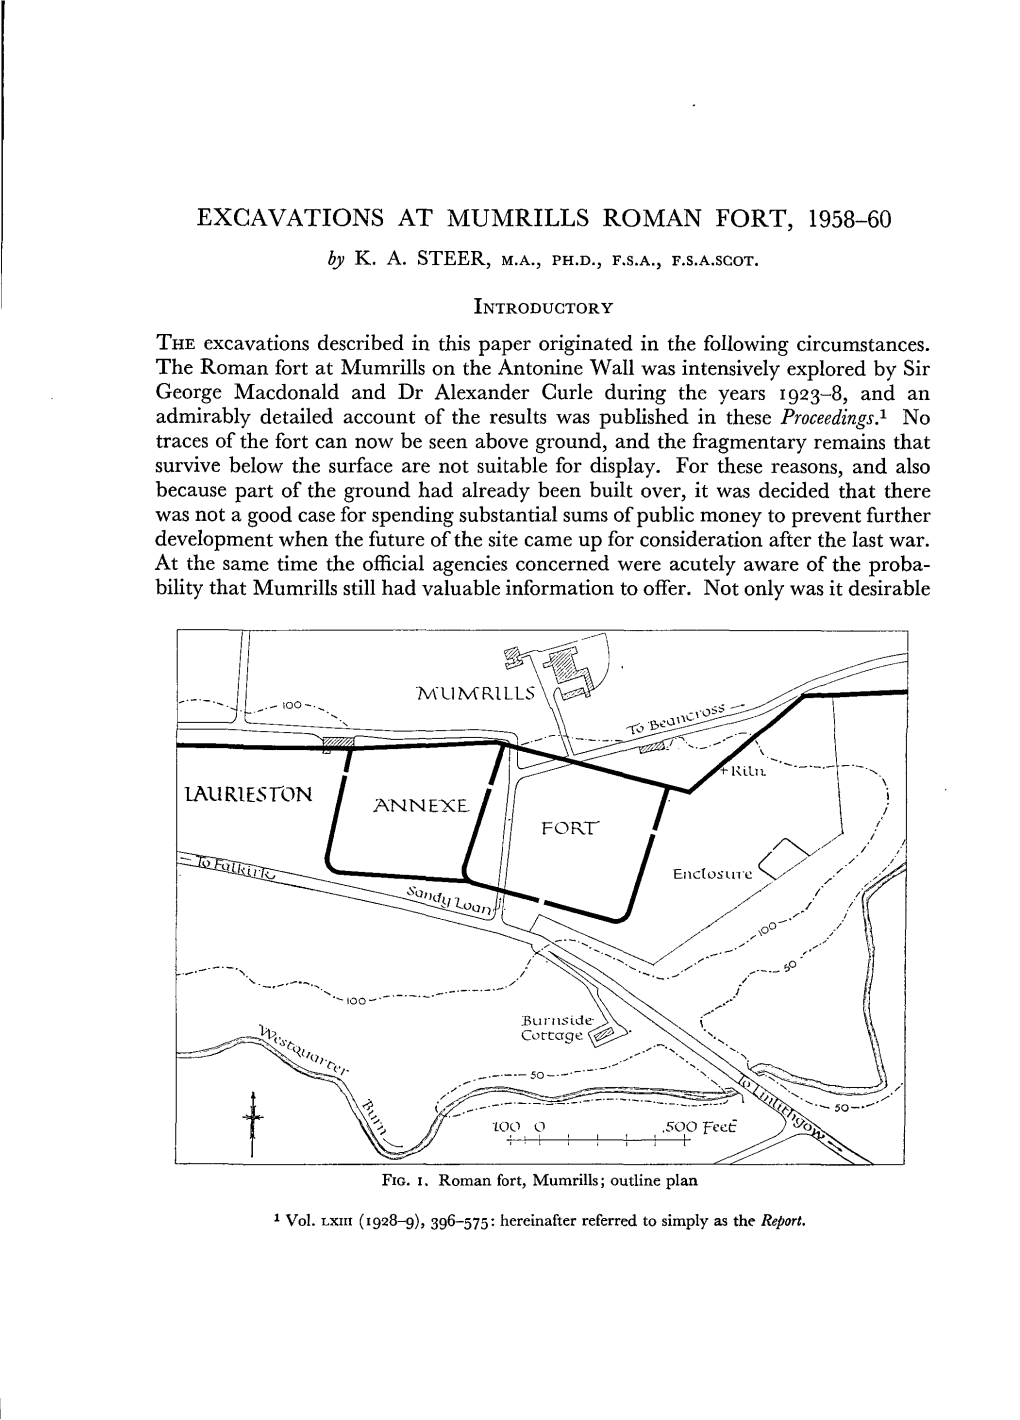 Excavations at Mumrills Roman Fort, 1958-60